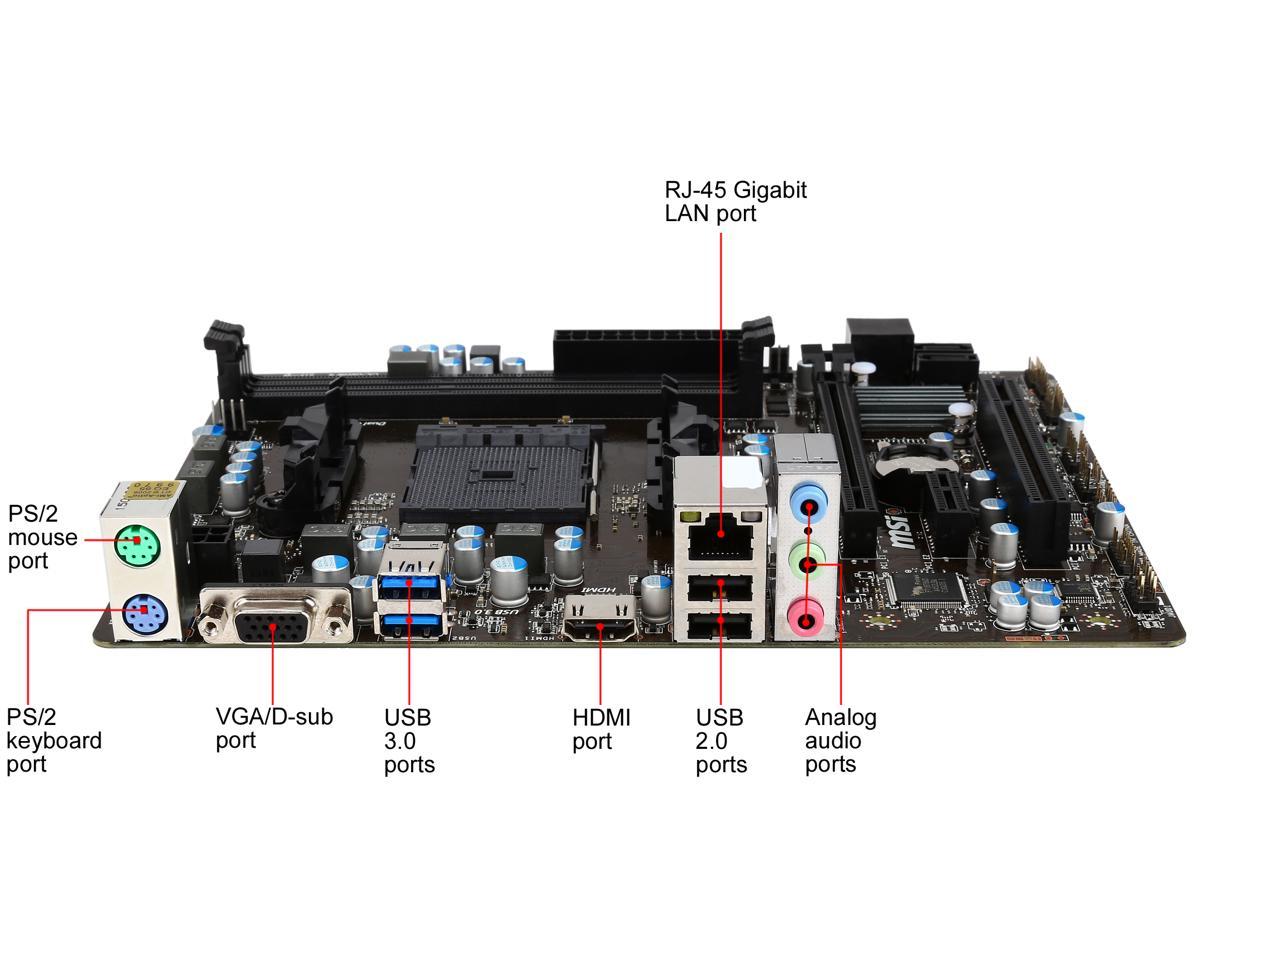 MSI A68HM-E33 V2 FM2+ AMD A68H SATA 6Gb/s USB 3.0 HDMI Micro ATX AMD Motherboard